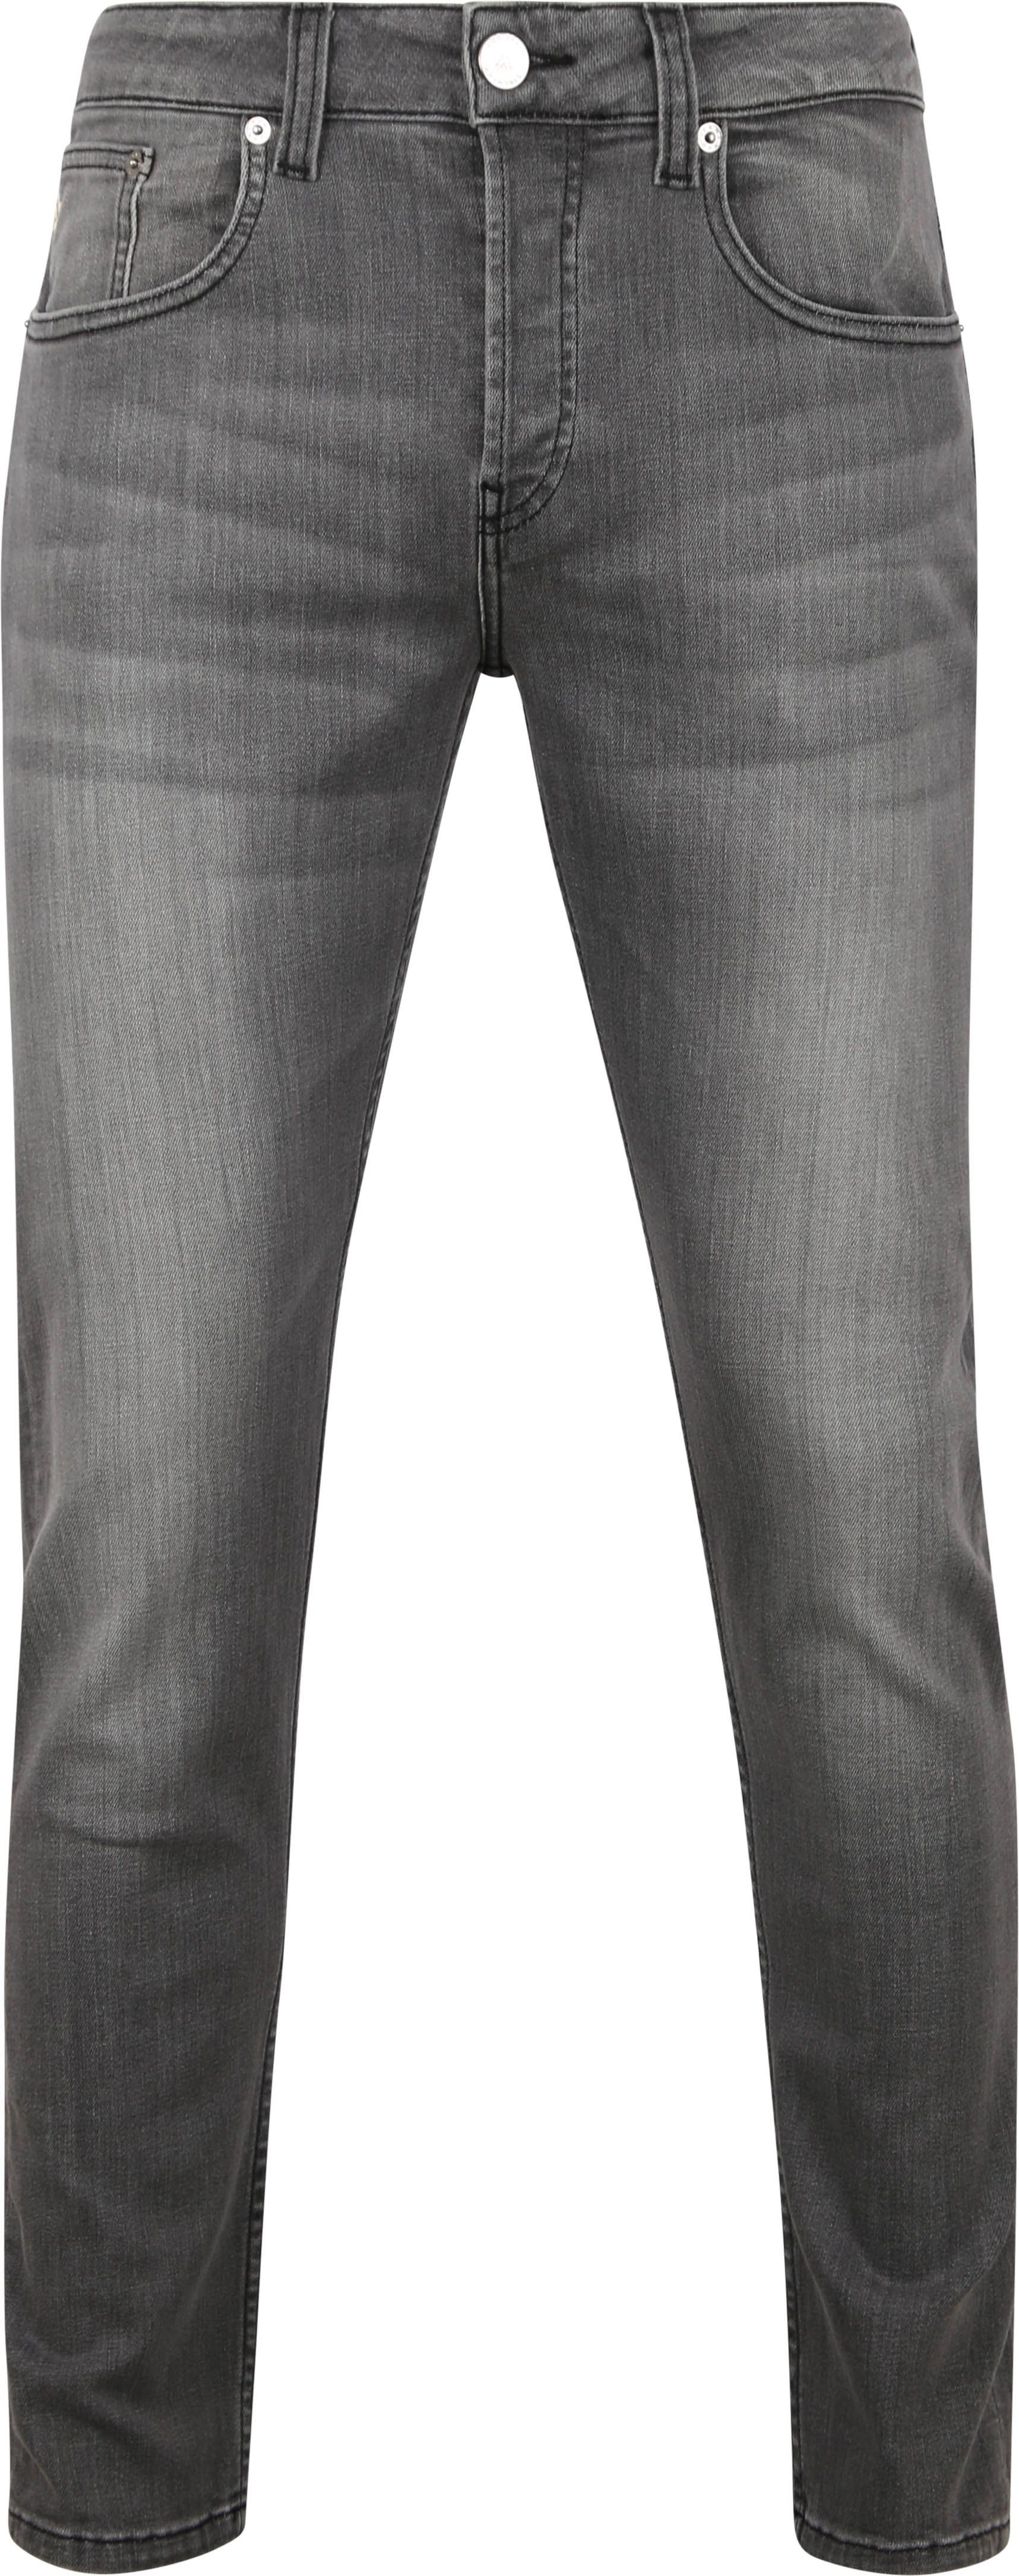 MUD Jeans Denim Slimmer Rick Grey size W 36 product